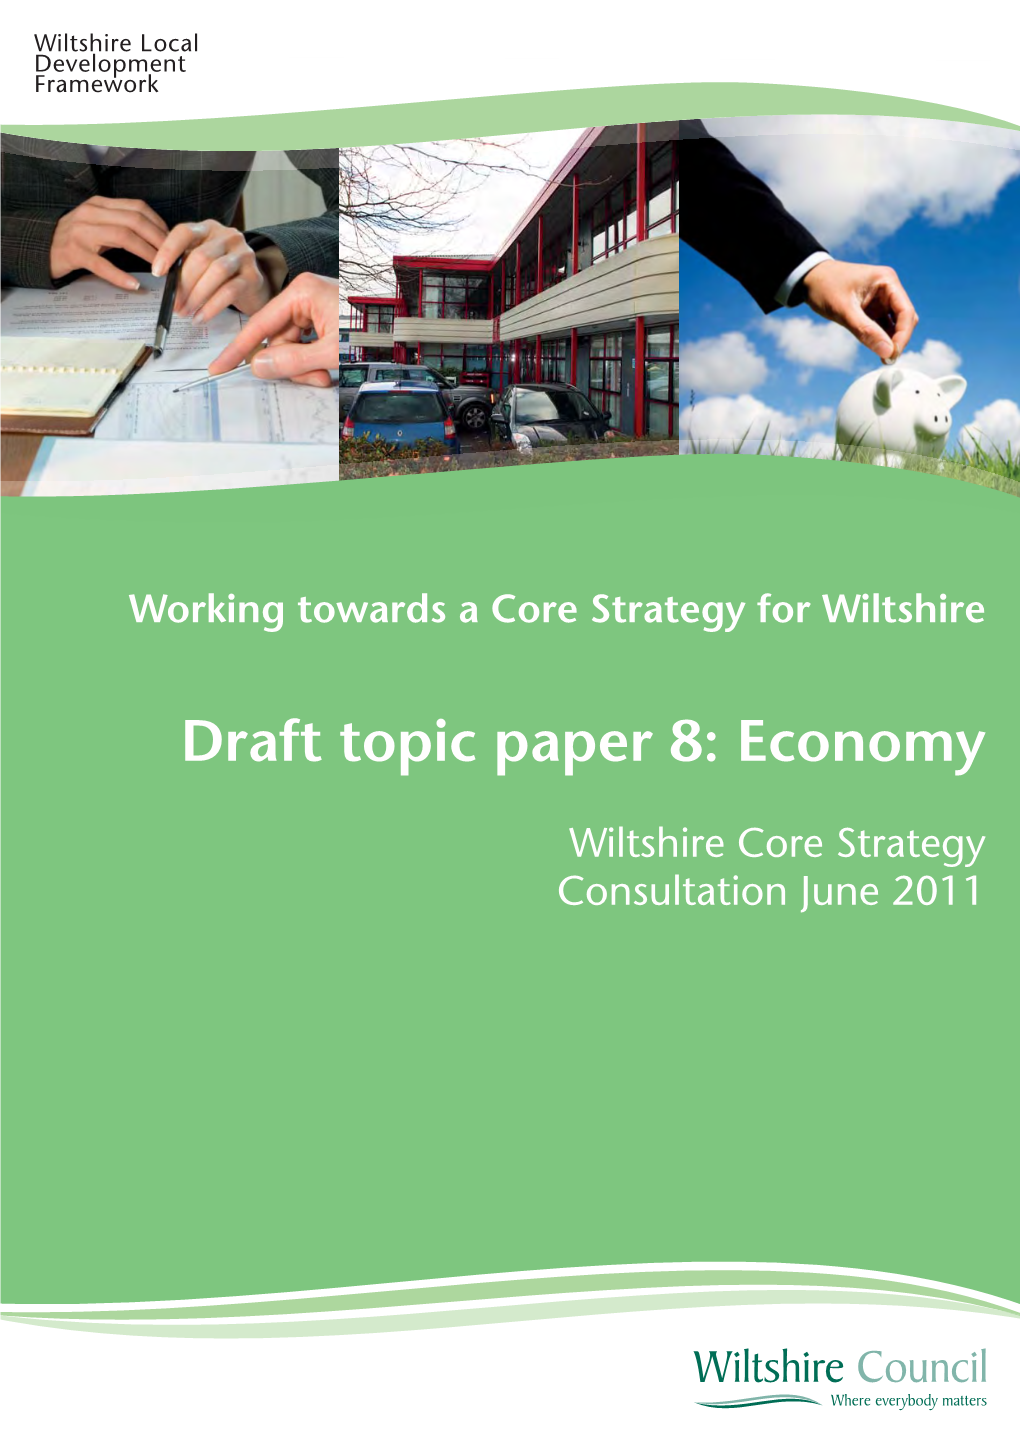 Wiltshire Core Strategy Consultation June 2011